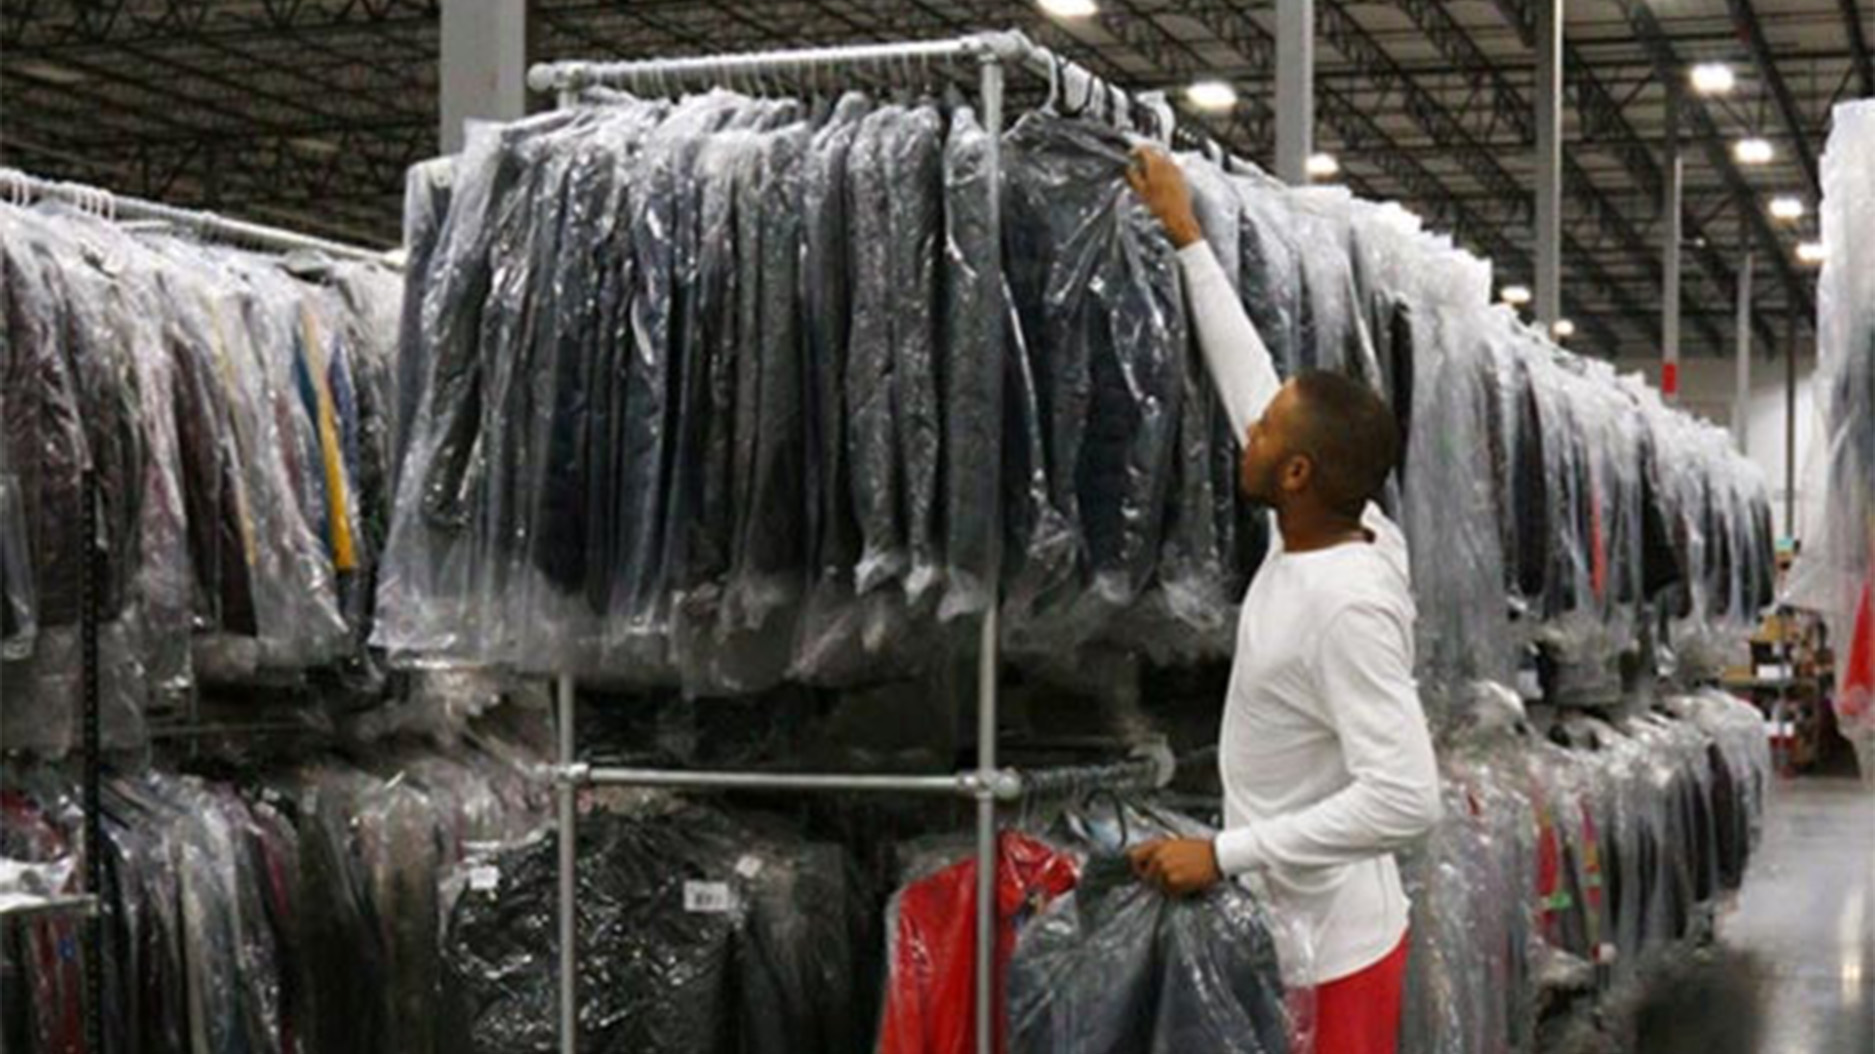 warehouse clothing rack with employee